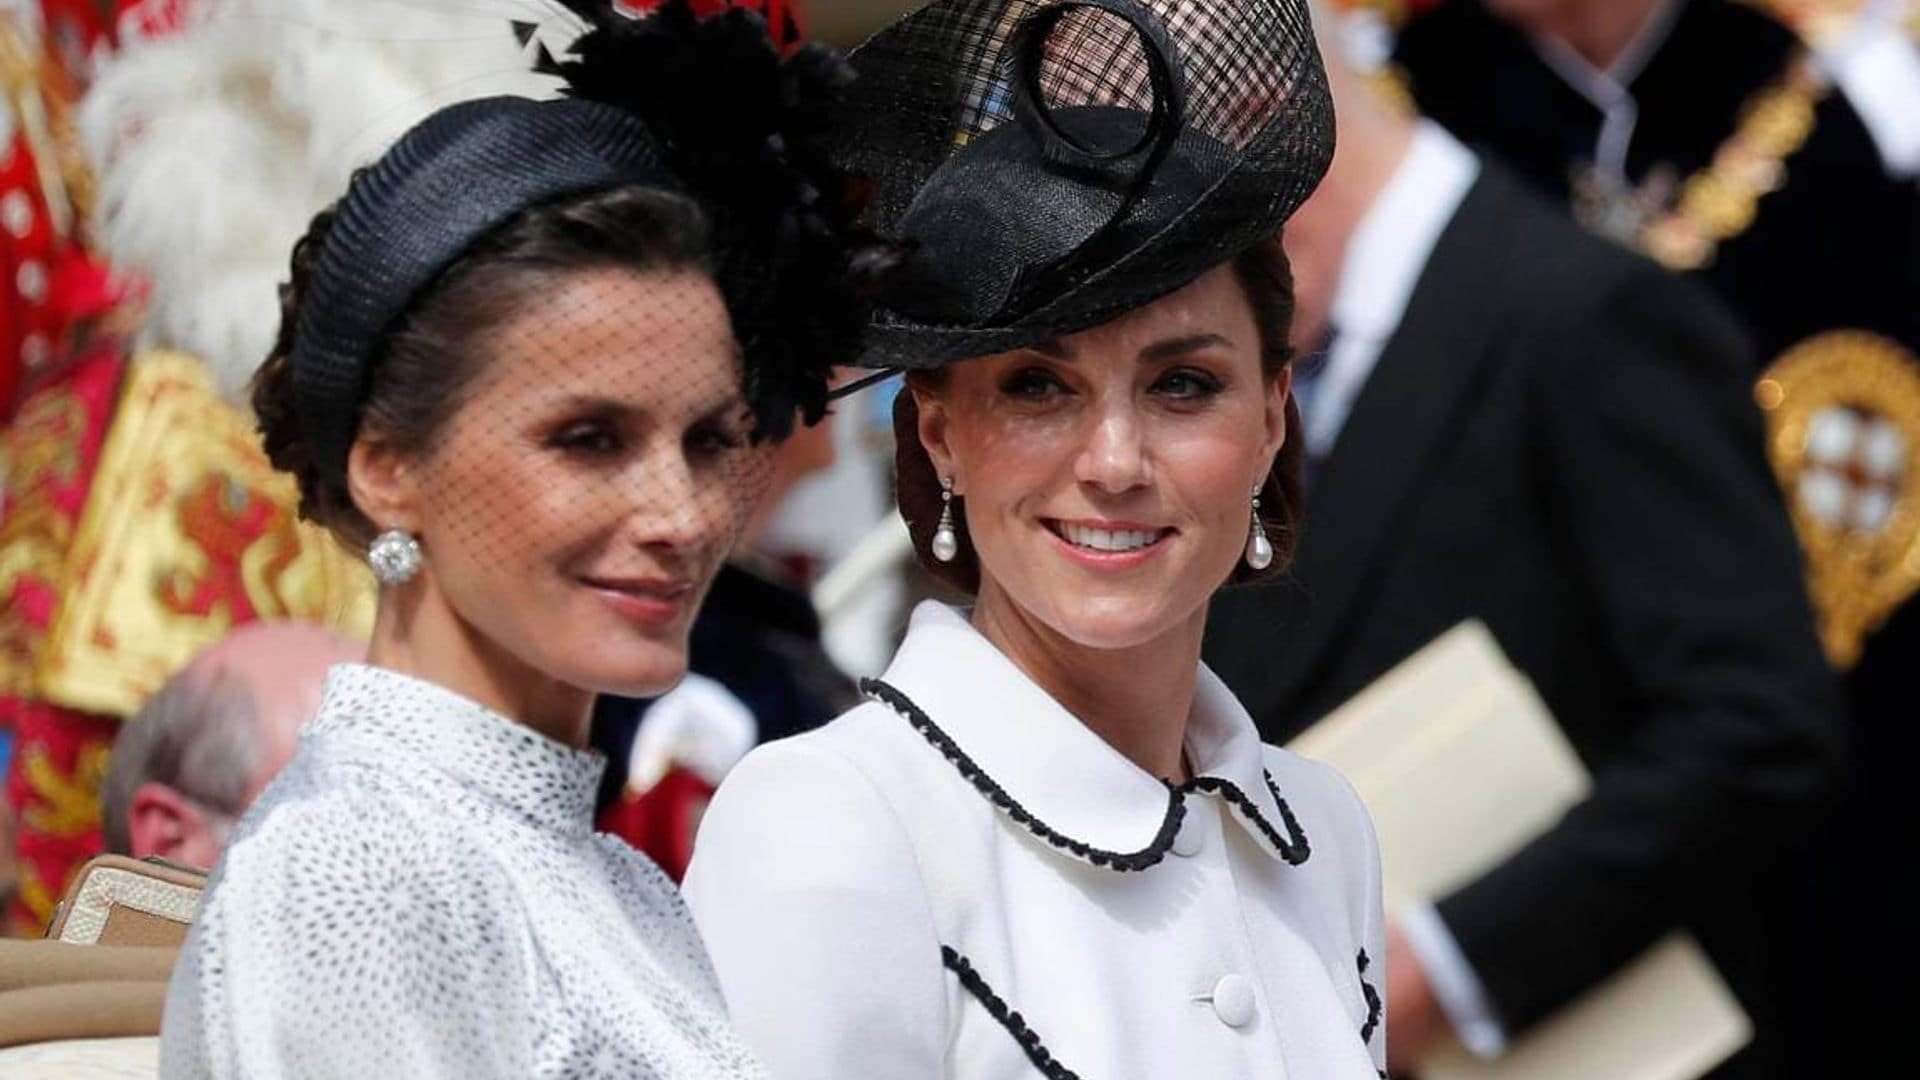 Kate Middleton rocks Queen Letizia's go-to summer hairstyle